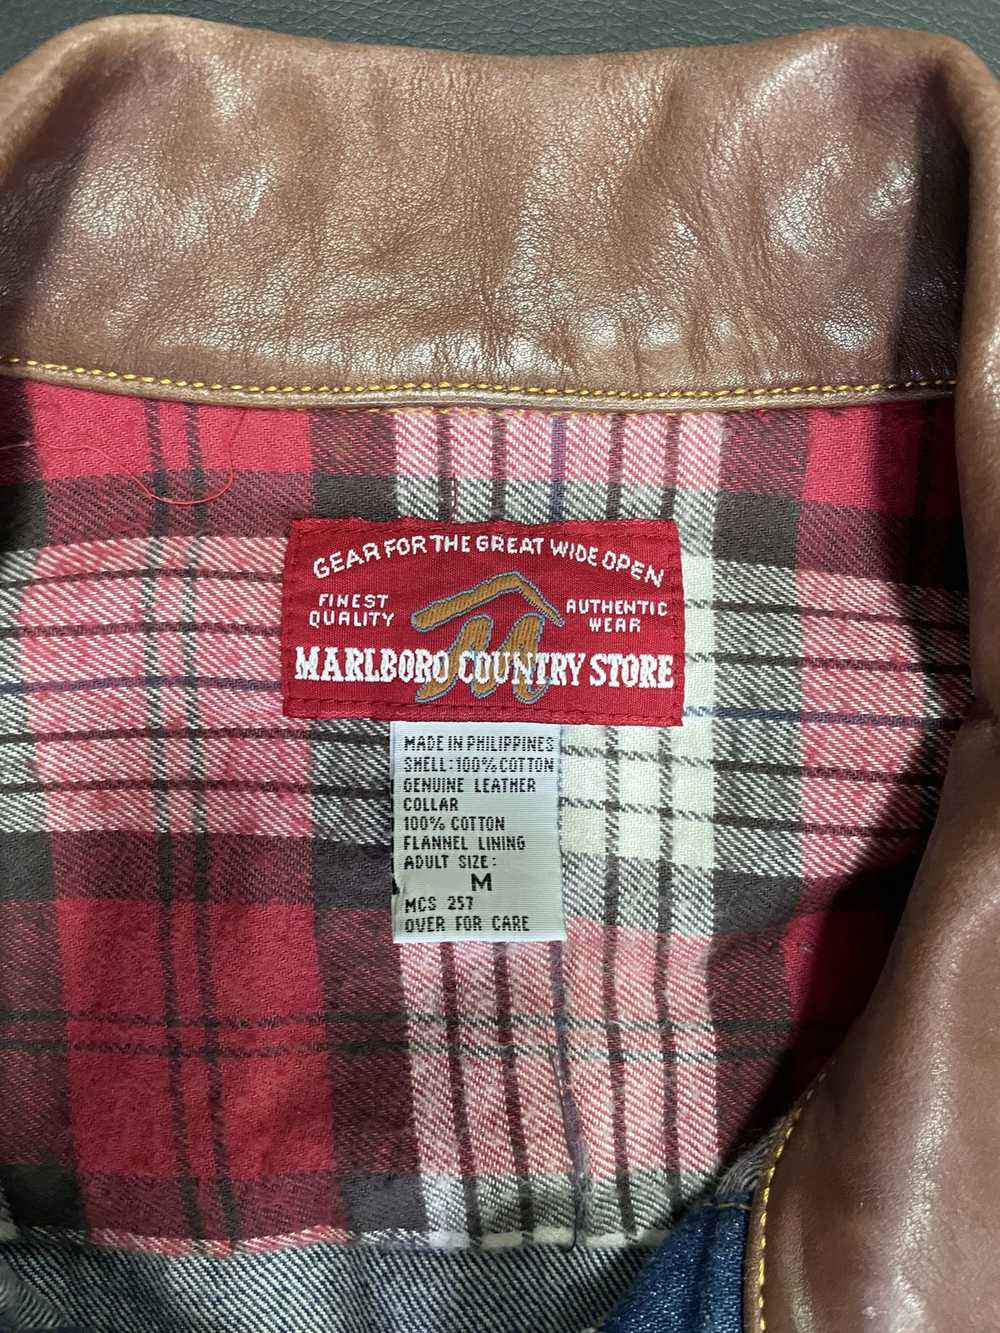 Marlboro Marlboro Country Store Denim Jacket - image 3